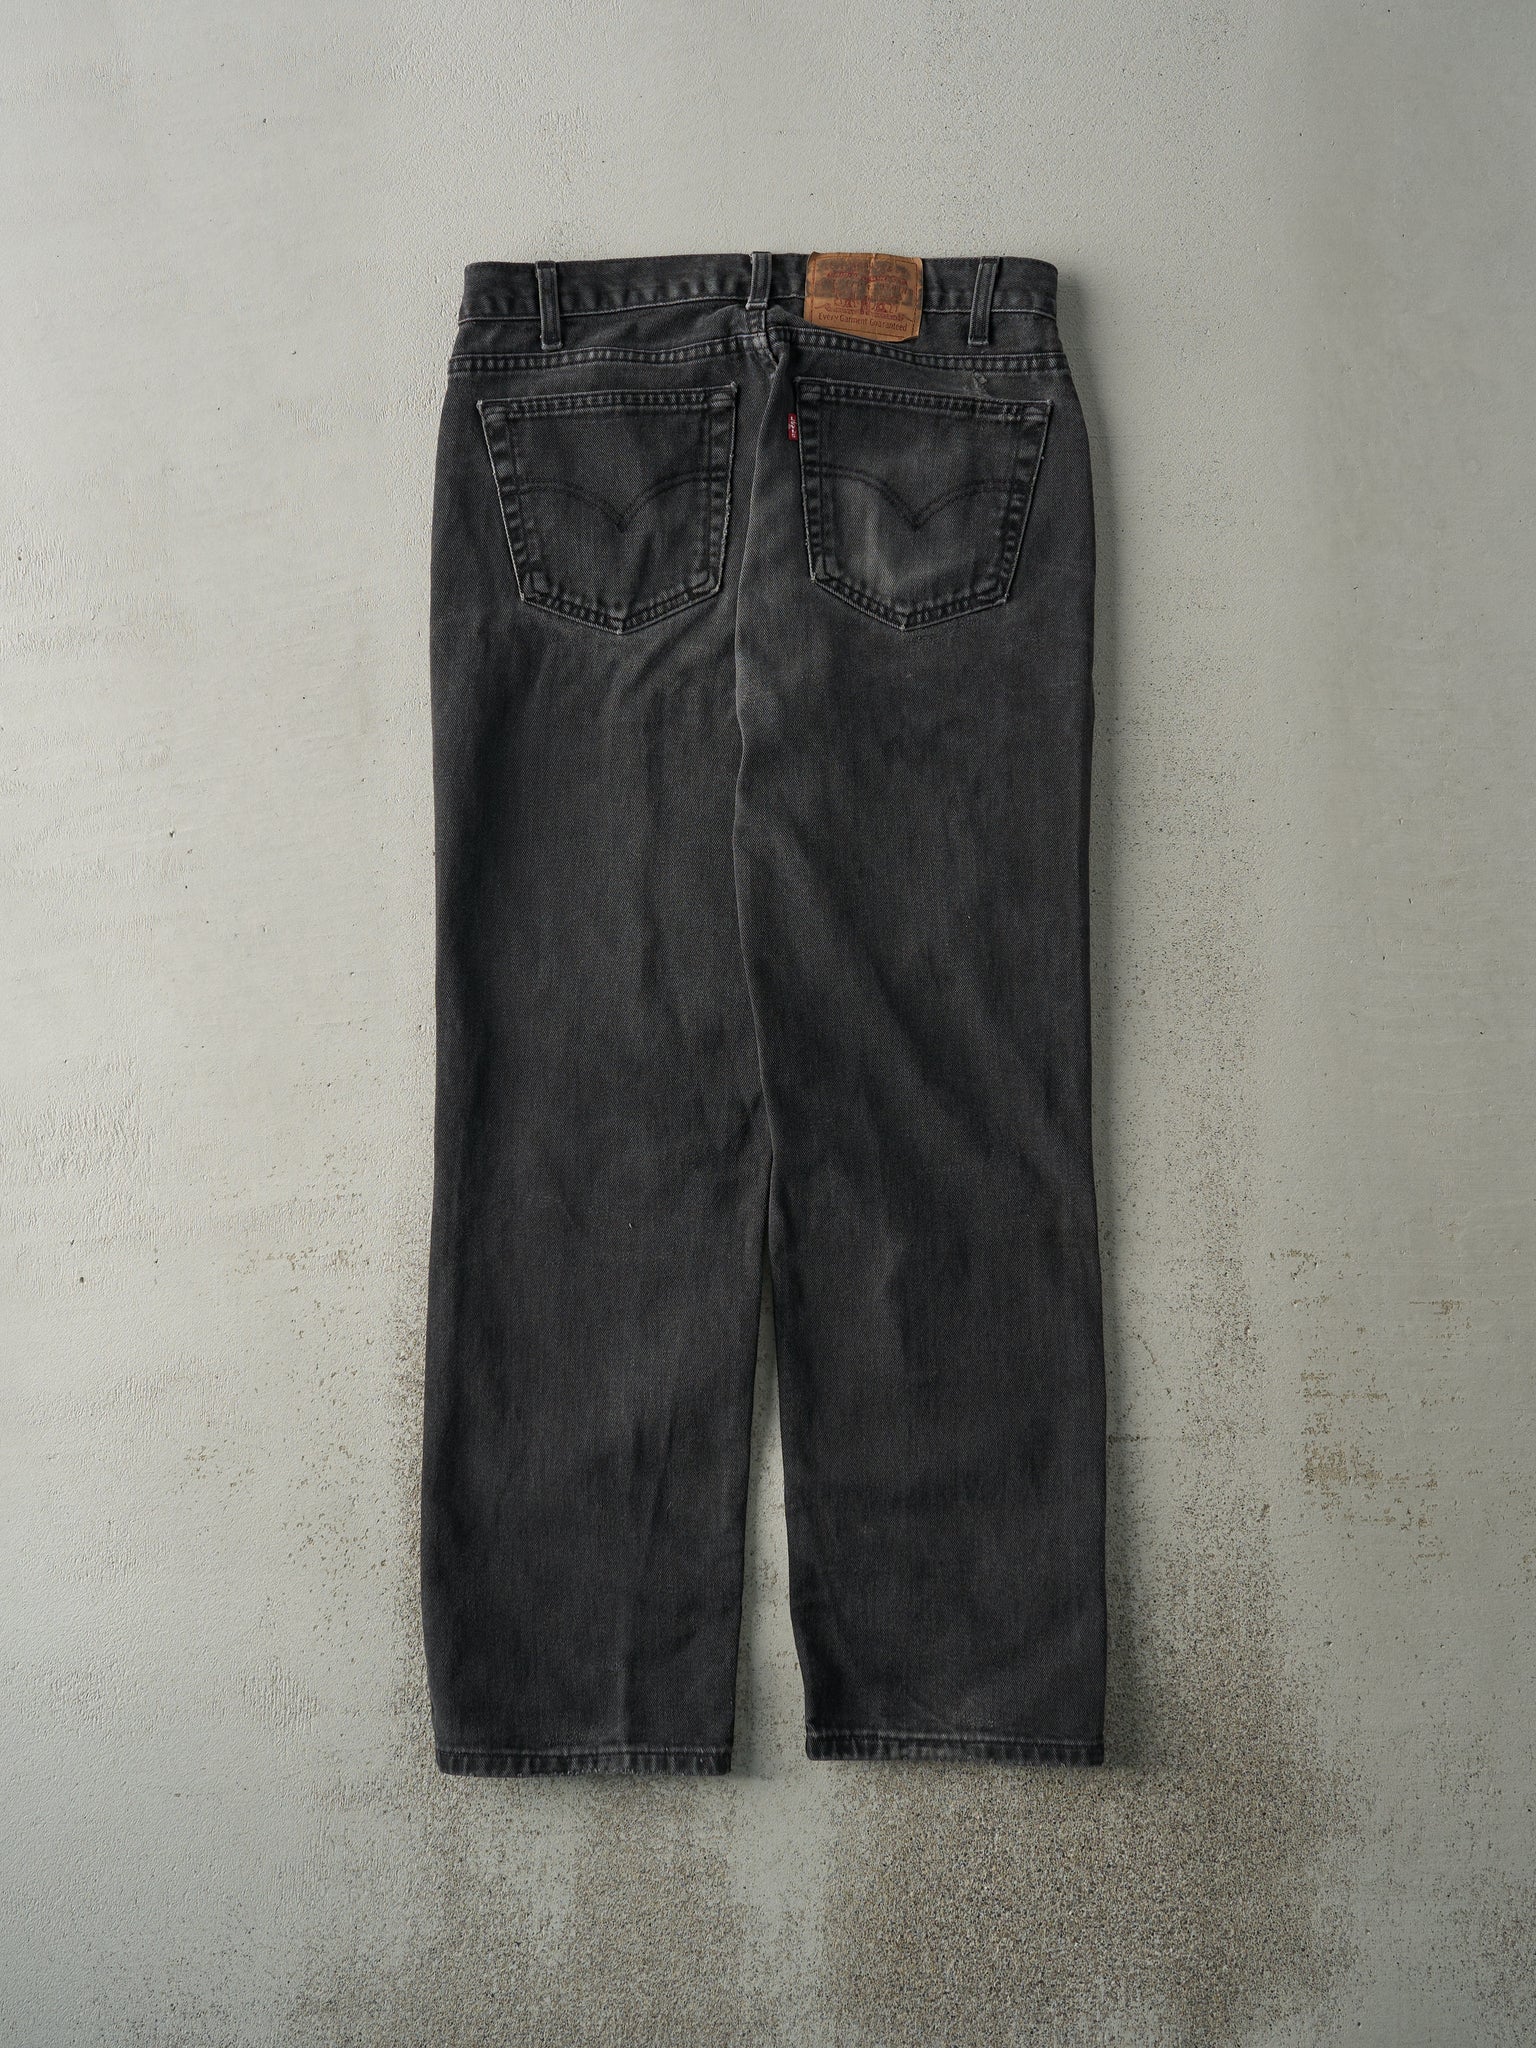 Vintage 90s Faded Black Levi's 516 Pants (32x29.5)